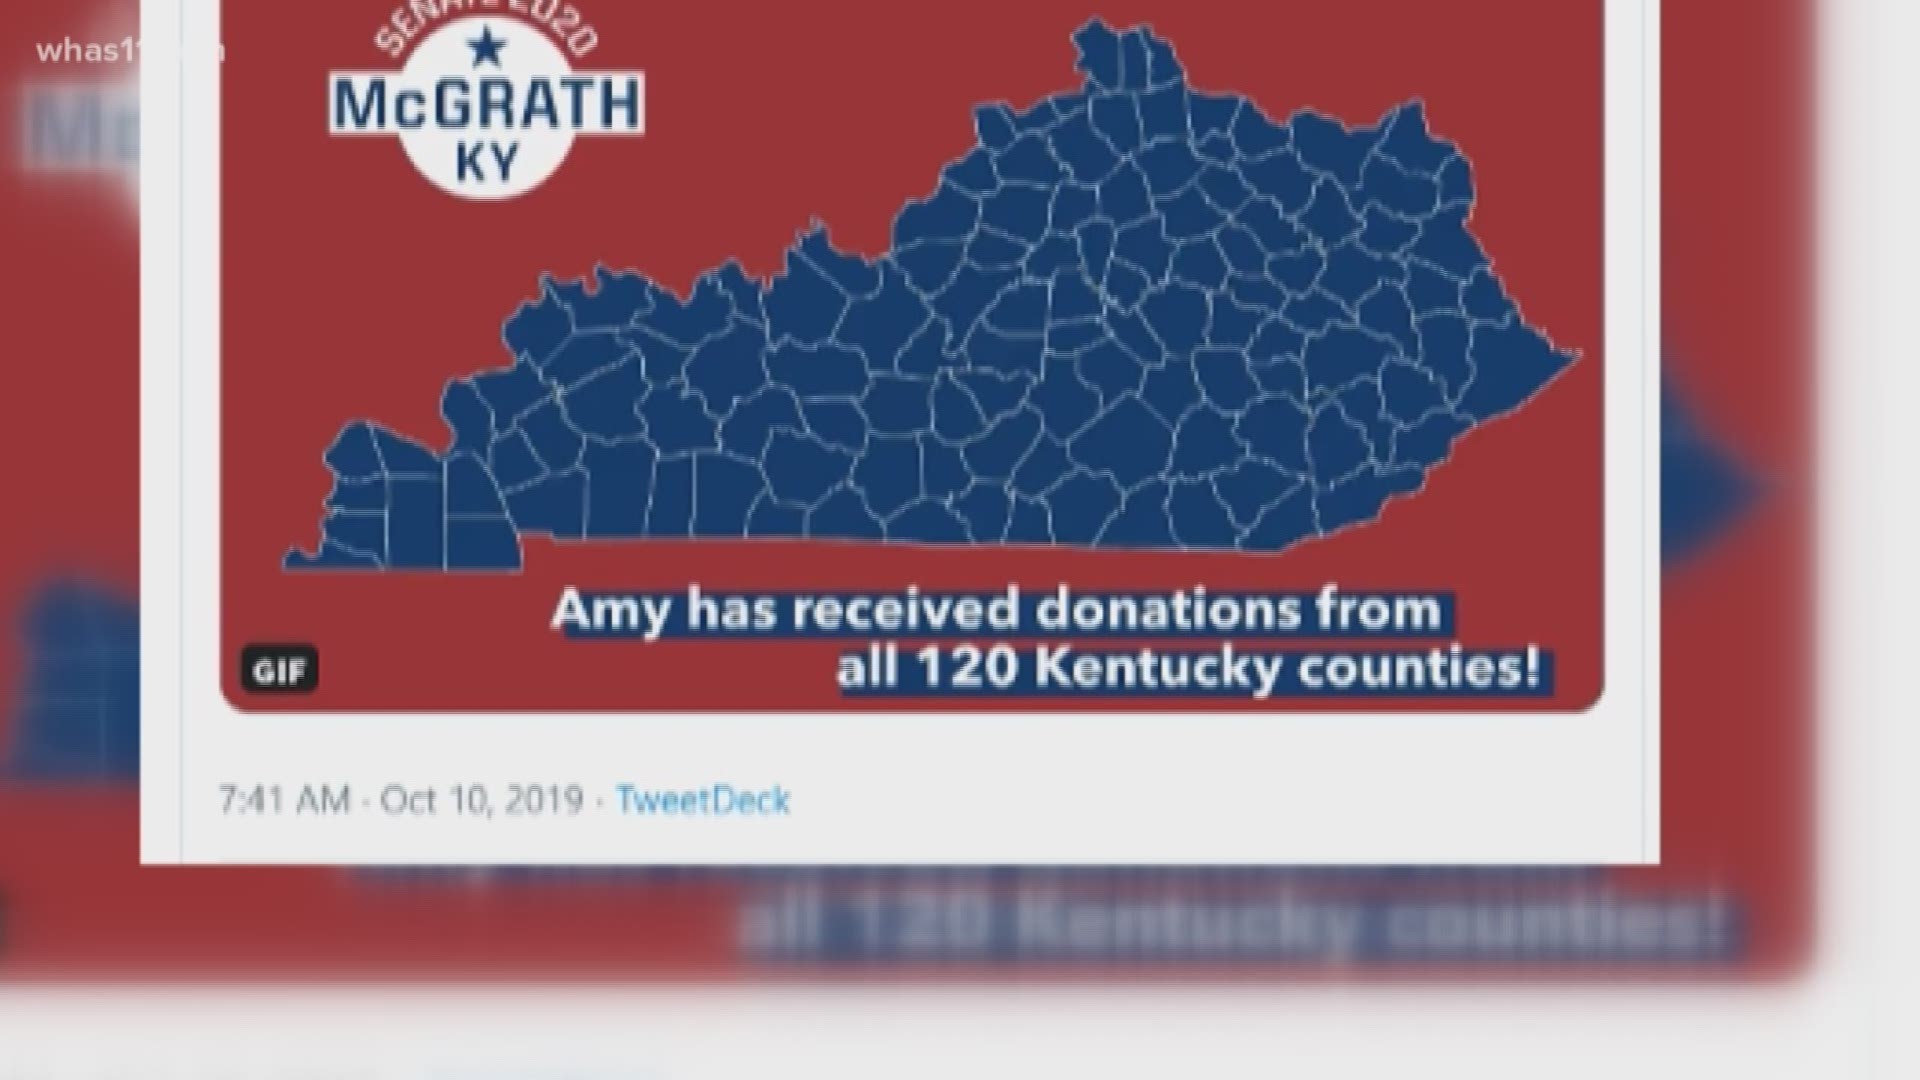 McGrath campaign raises $10.7M, breaks records